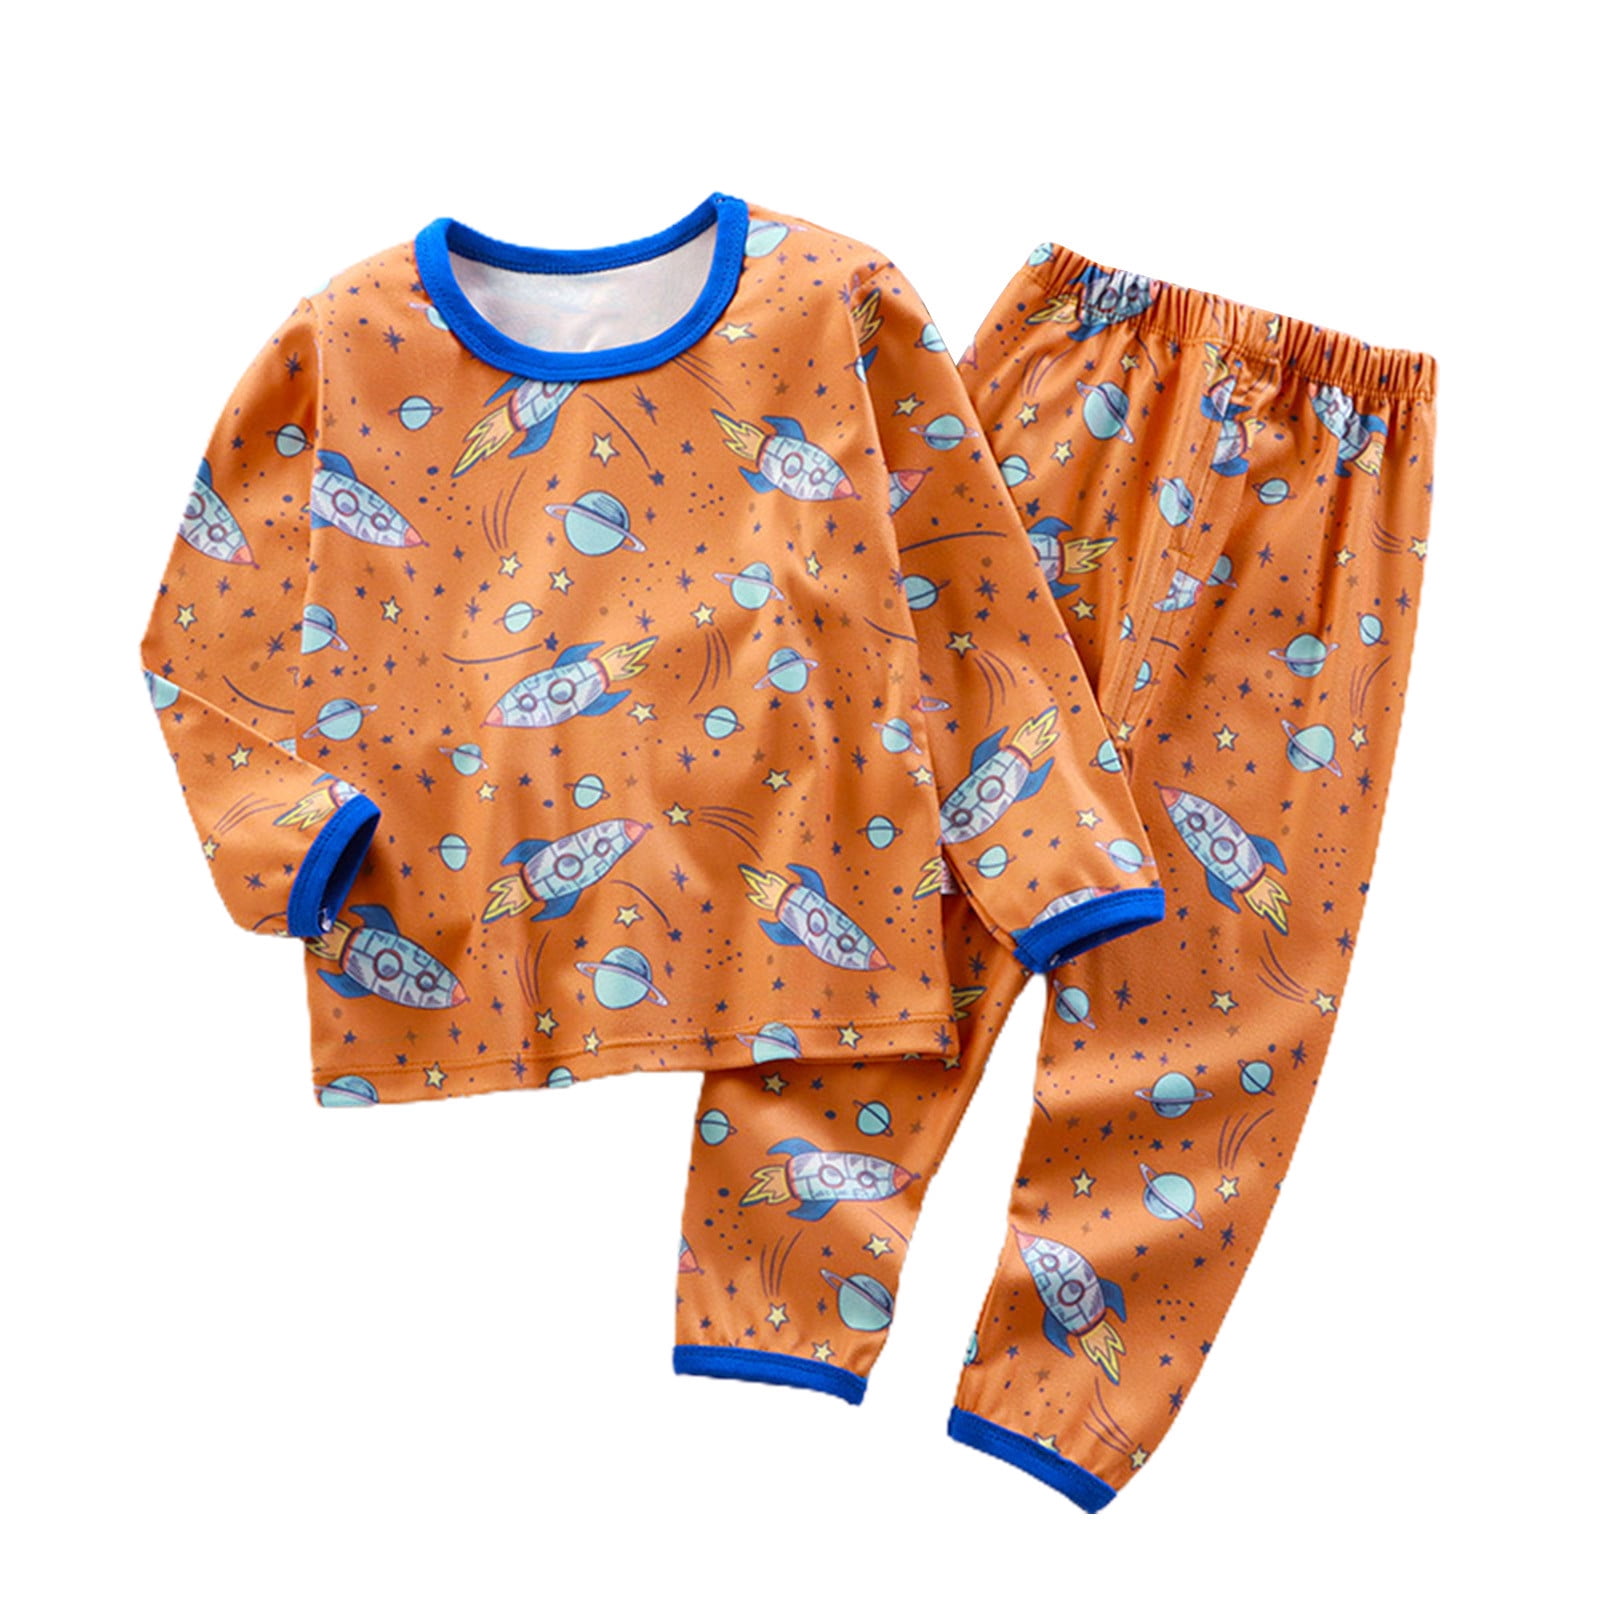 Lovskoo 1-12 Years Kids Baby Thermal Underwear Long Johns for Boys Girls  Base Layer Toddler Thermal Set Ultra Soft Beige